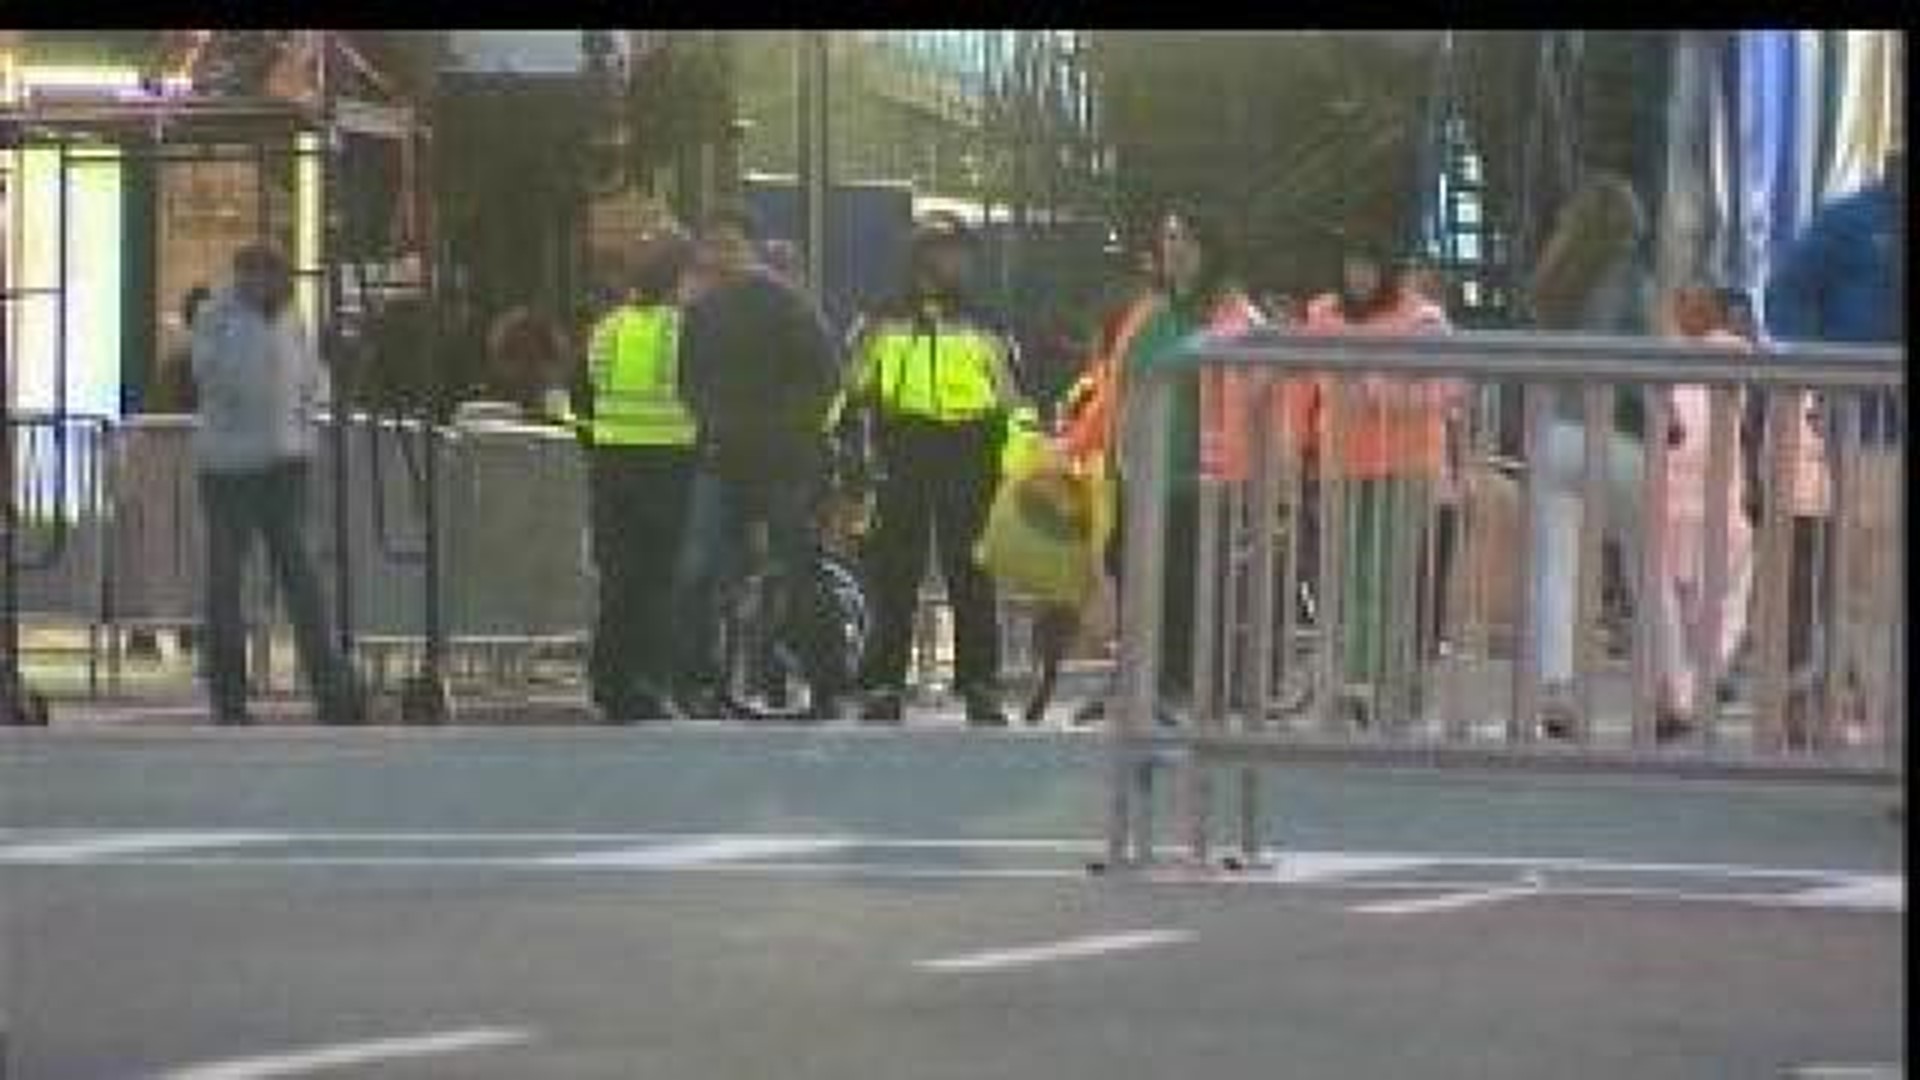 Boston Marathon, one year after bombing attacks